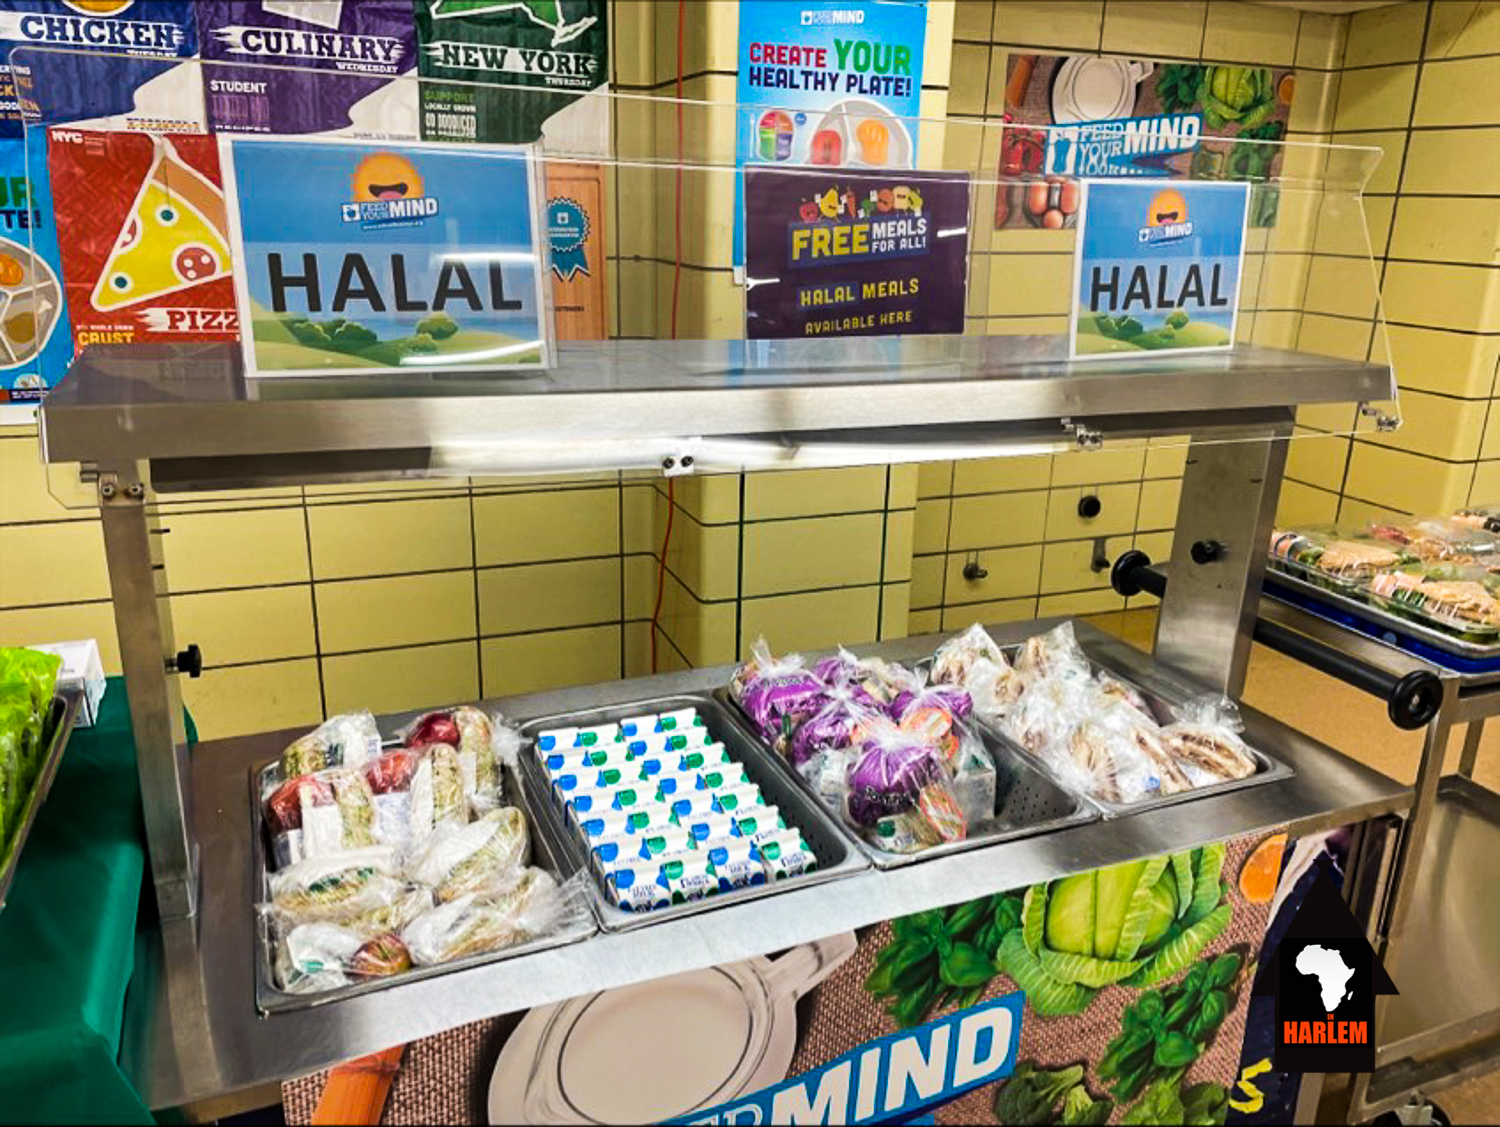 Halal-meals-pilot-program-expands-in-11-additional-NYC-schools-13.jpg